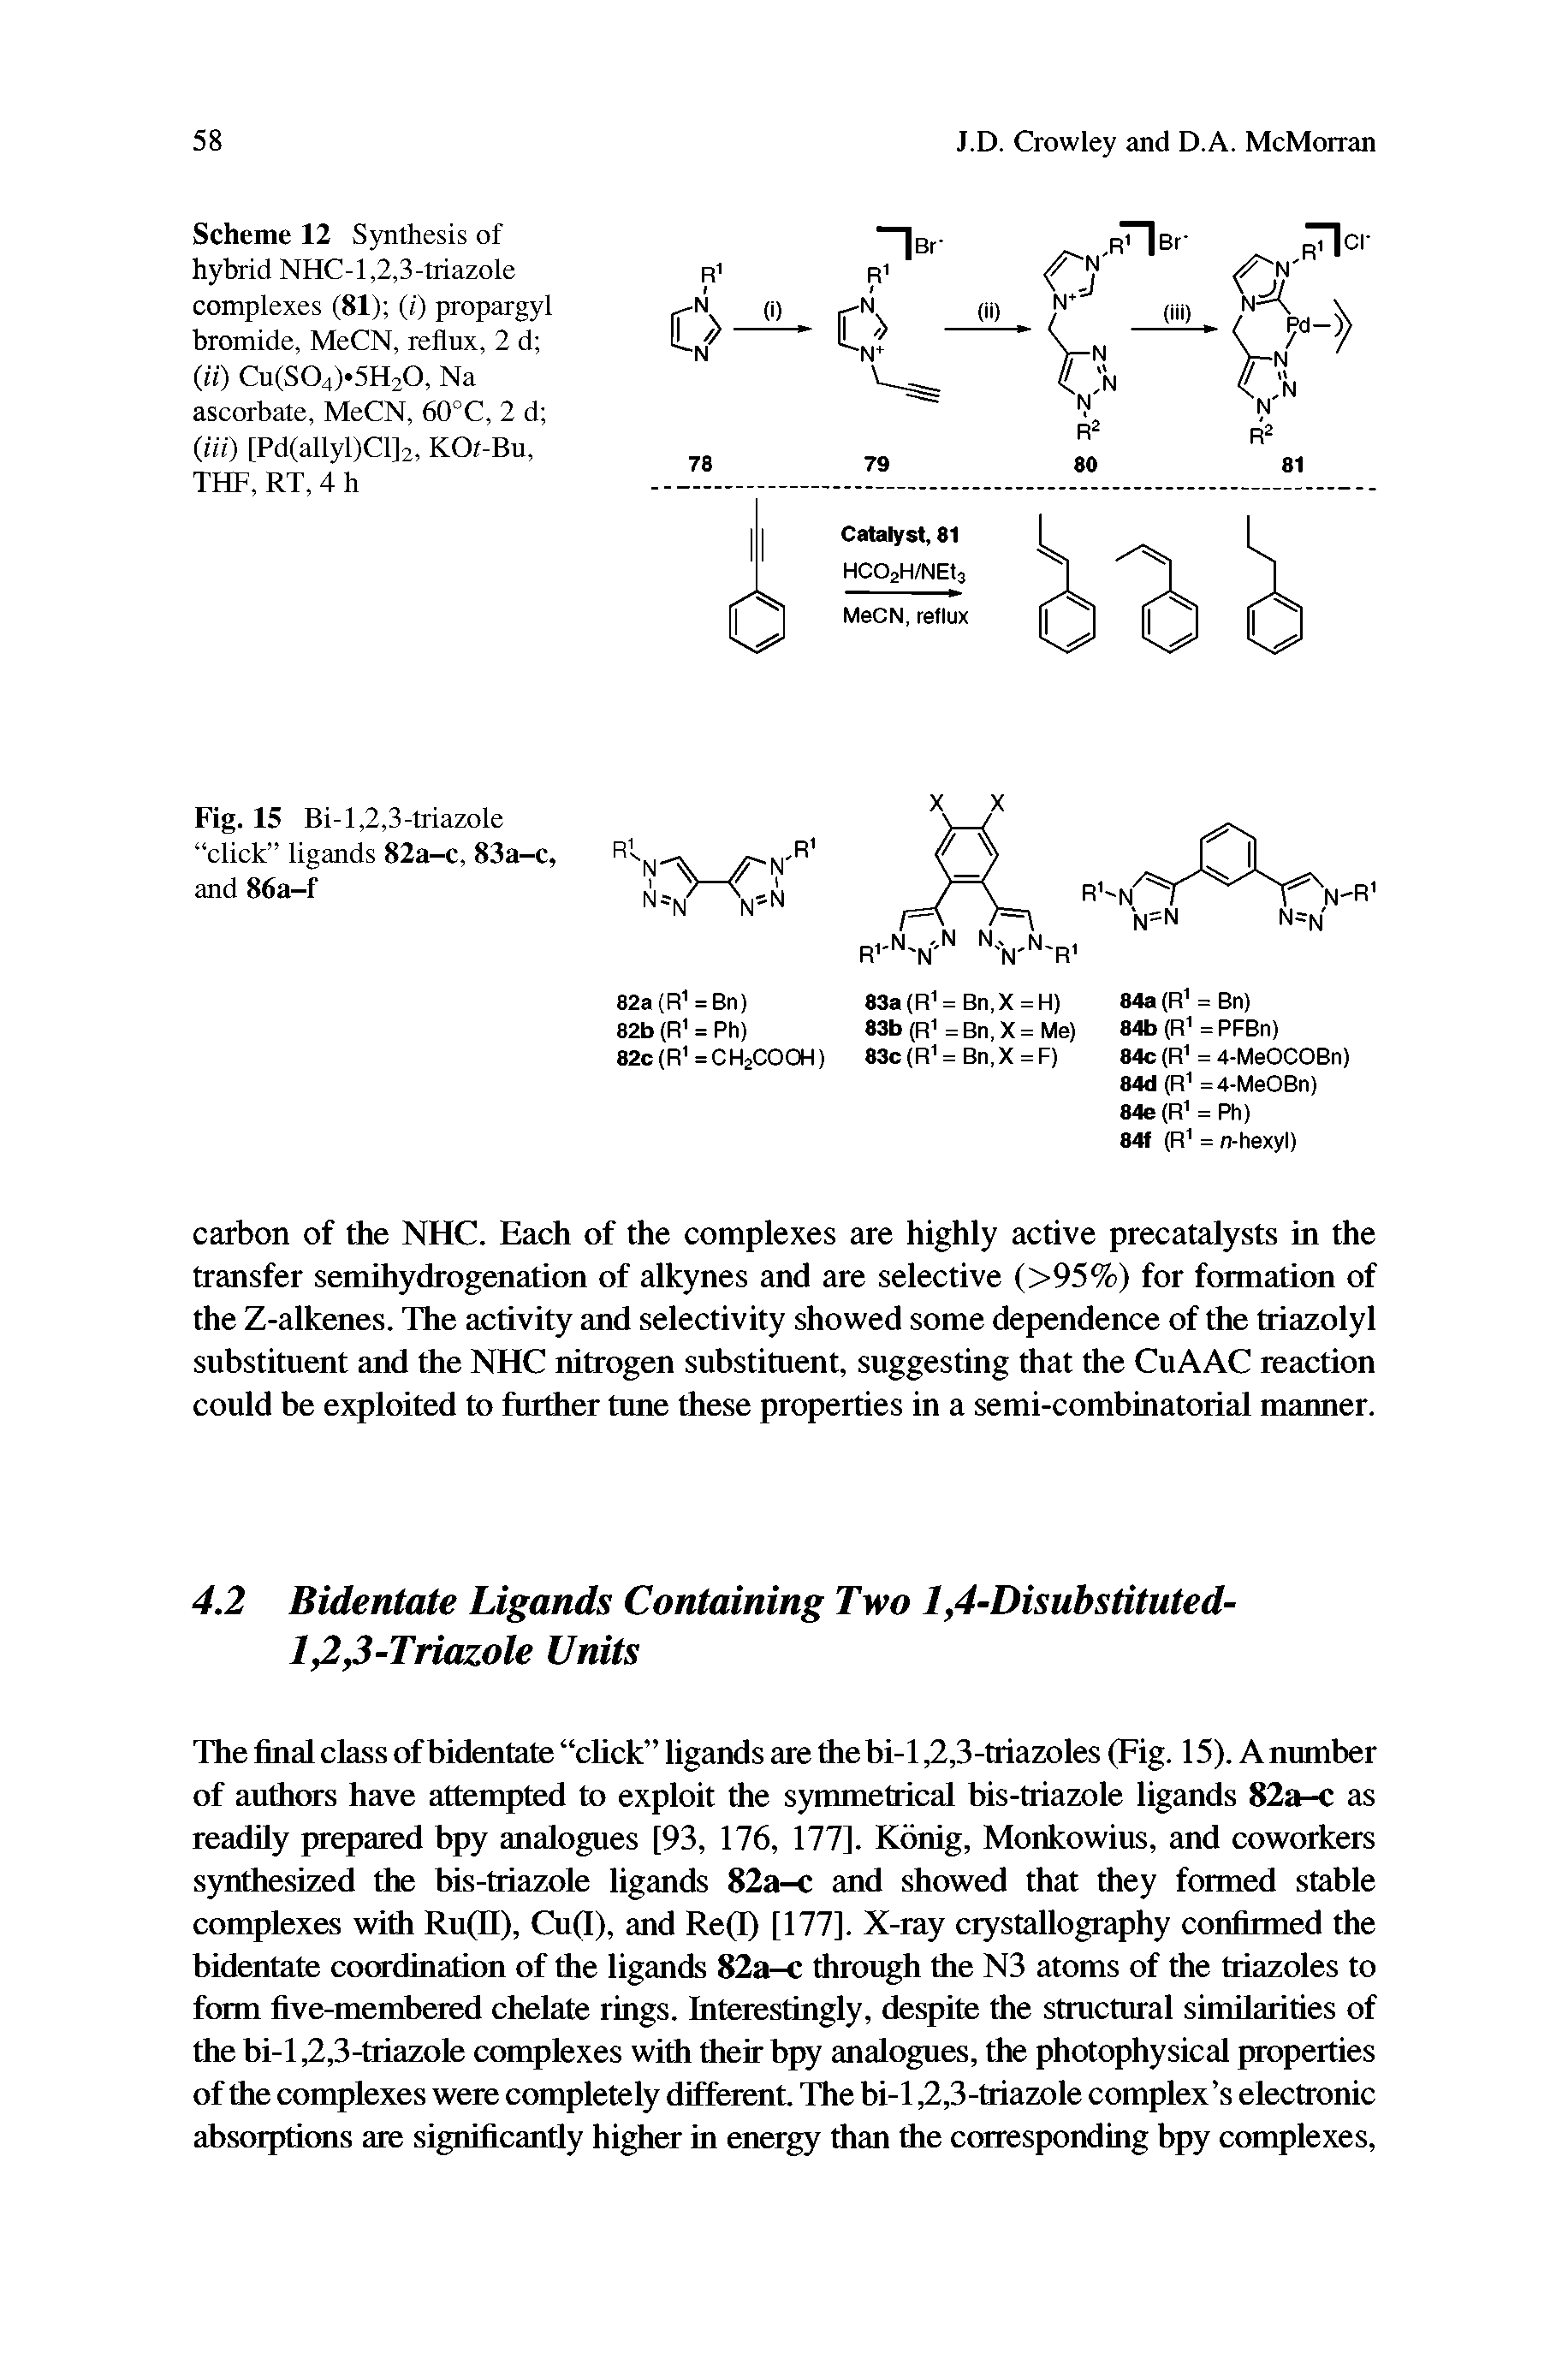 Scheme 12 Synthesis of hybrid NHC-1,2,3-triazole complexes (81) (i) propargyl bromide, MeCN, reflux, 2 d (ii) Cu(S04)-5H20, Na ascorbate, MeCN, 60°C, 2 d (Hi) [Pd(allyl)Cl]2, KOt-Bu, THF, RT, 4 h...